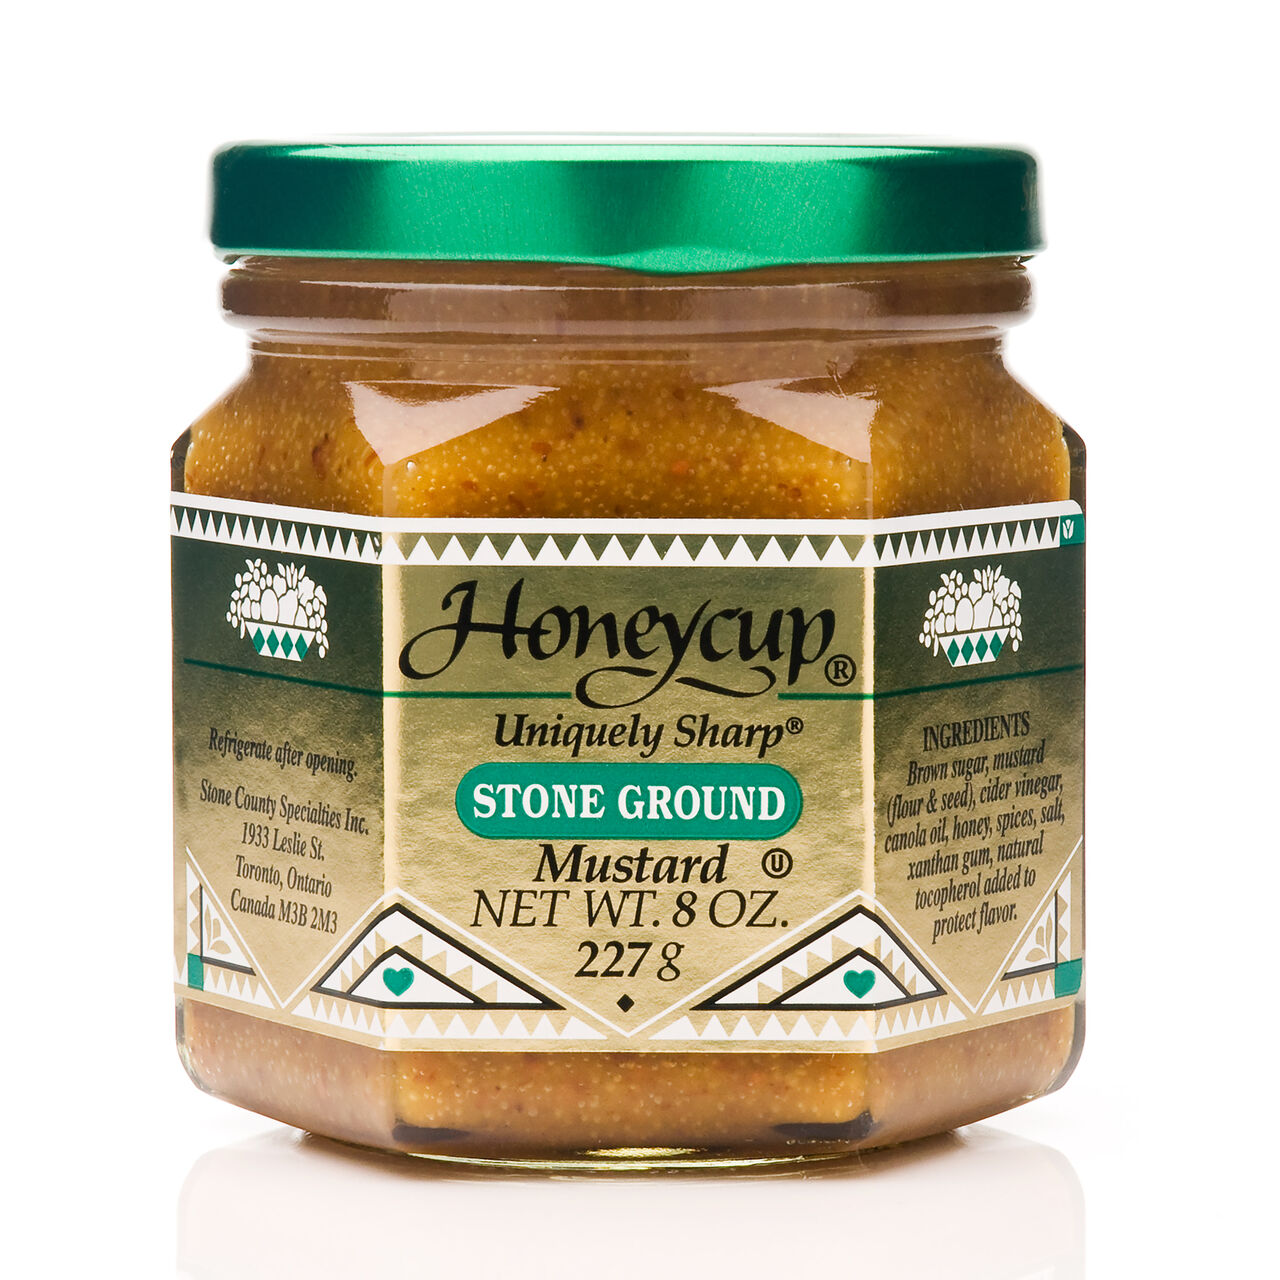 Honeycup Uniquely Sharp Stone Ground Mustard - 8oz, , large image number 0